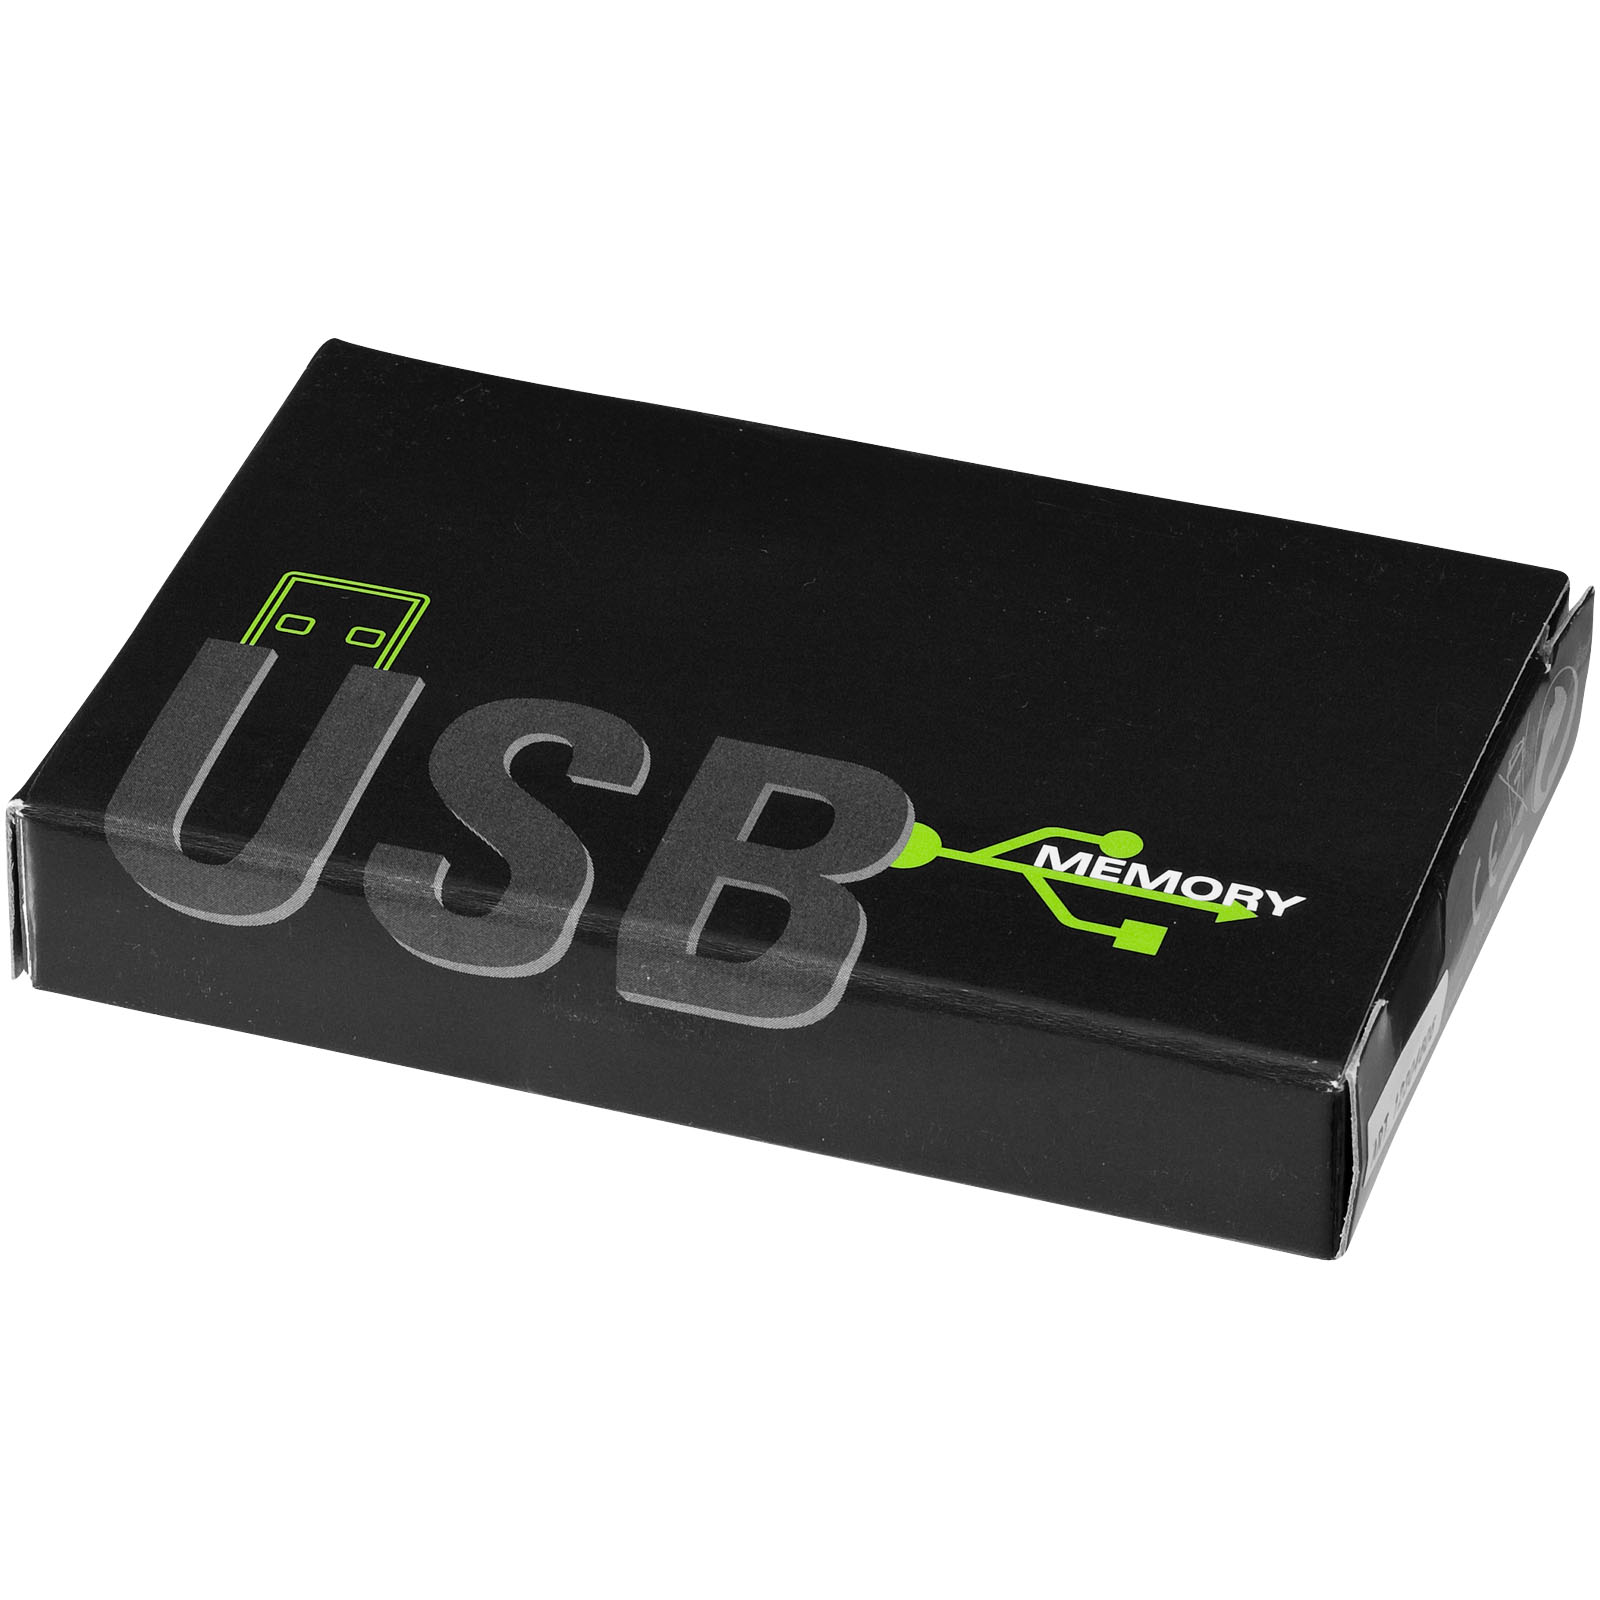 Slim 2 GB USB-Stick im Kreditkartenformat